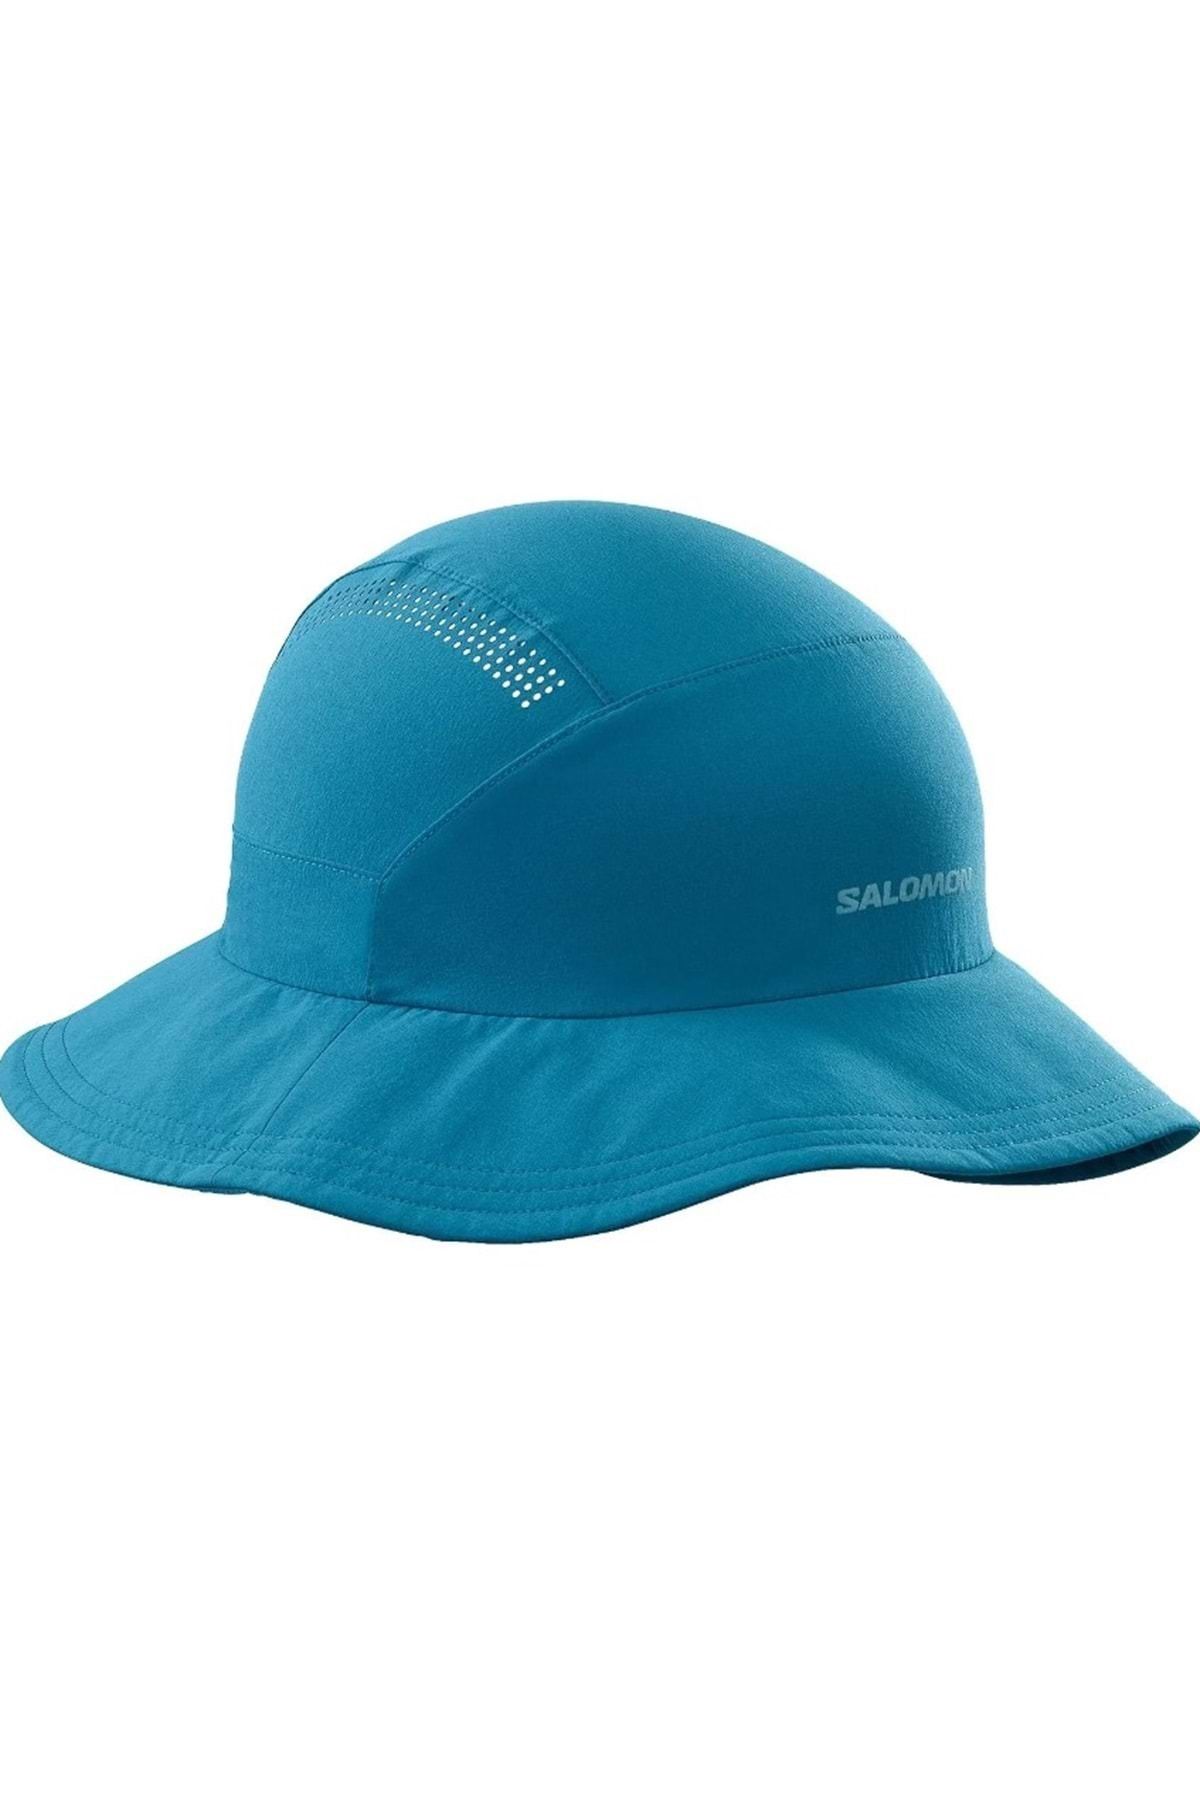 Salomon Mountain Line Foter Unisex Hat Navy Blue